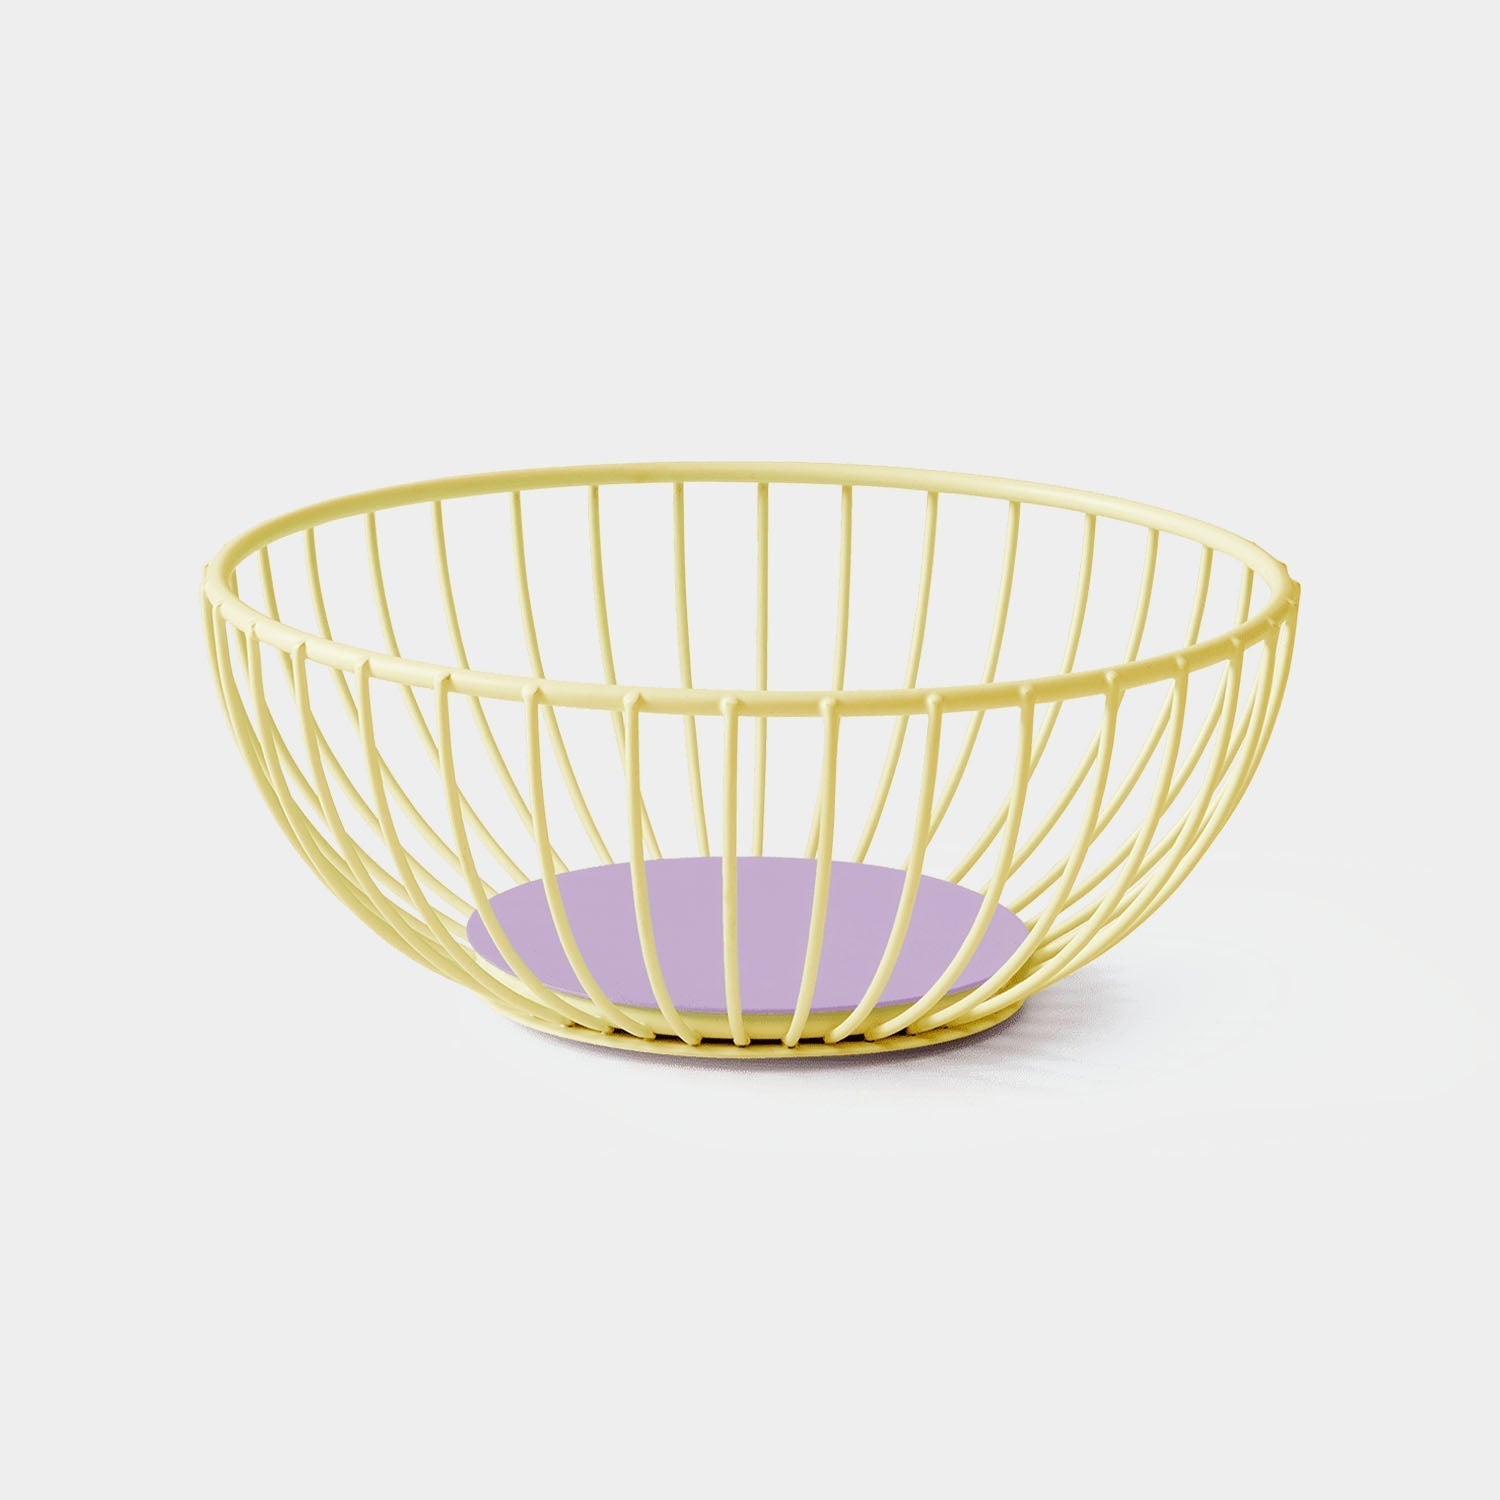 Iris Wire Basket in yellow by Octaevo